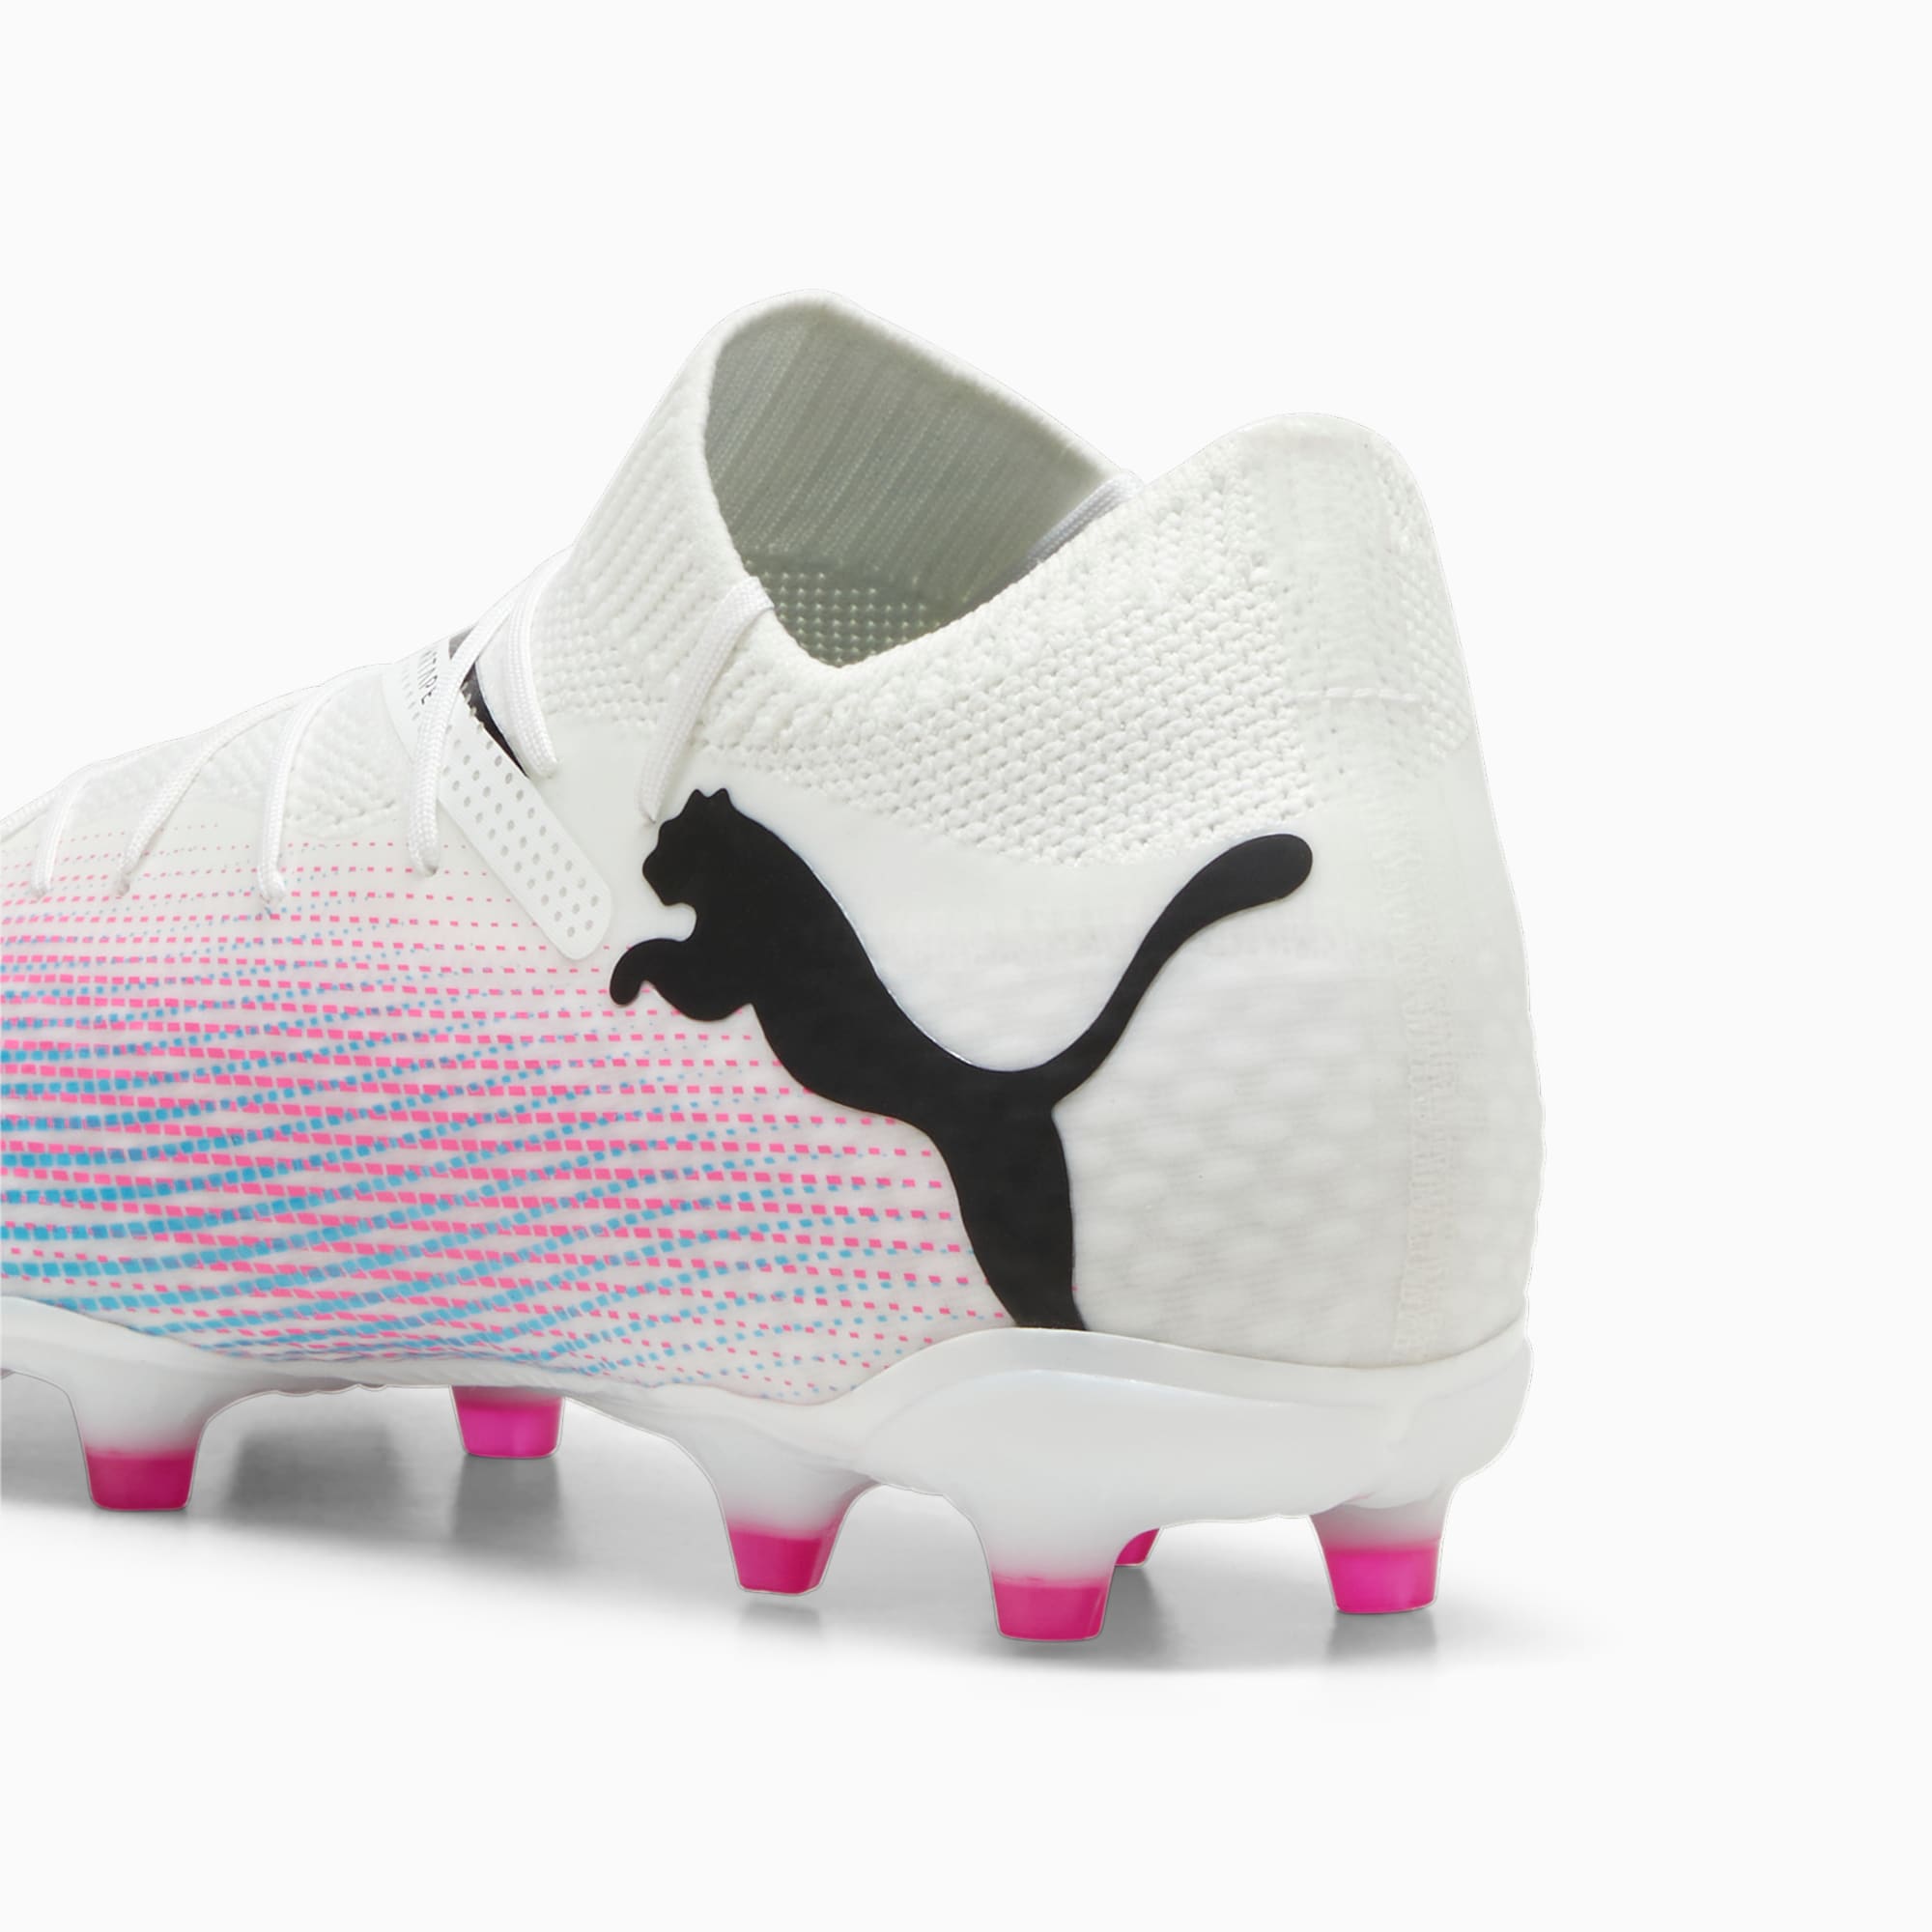 Men's PUMA Future 7 Pro FG/AG Football Boots, White/Black/Poison Pink